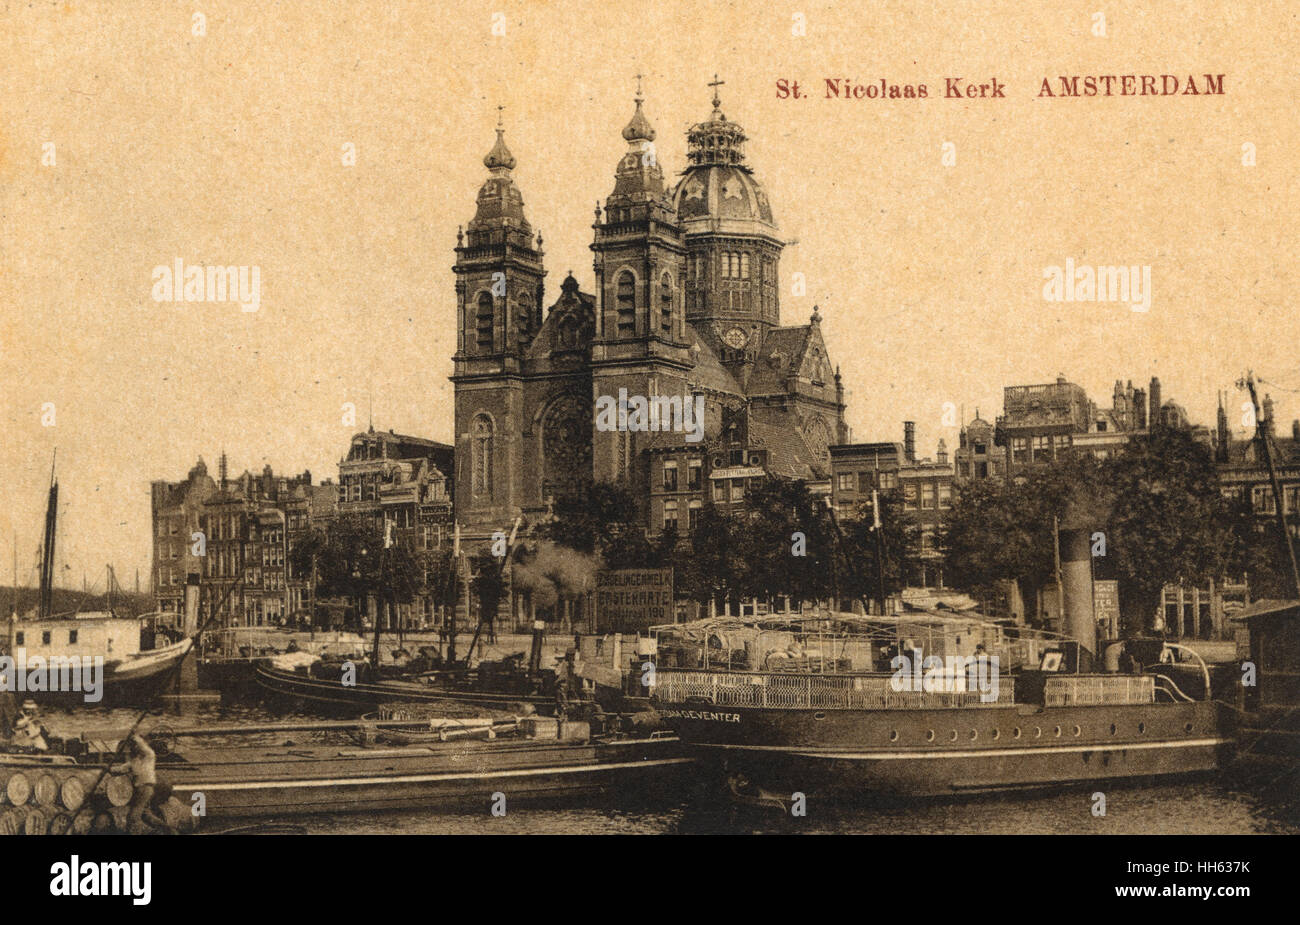 Amsterdam, The Netherlands - Basiliek van de Heilige Nicolaas (The Basilica of Saint Nicholas). Stock Photo